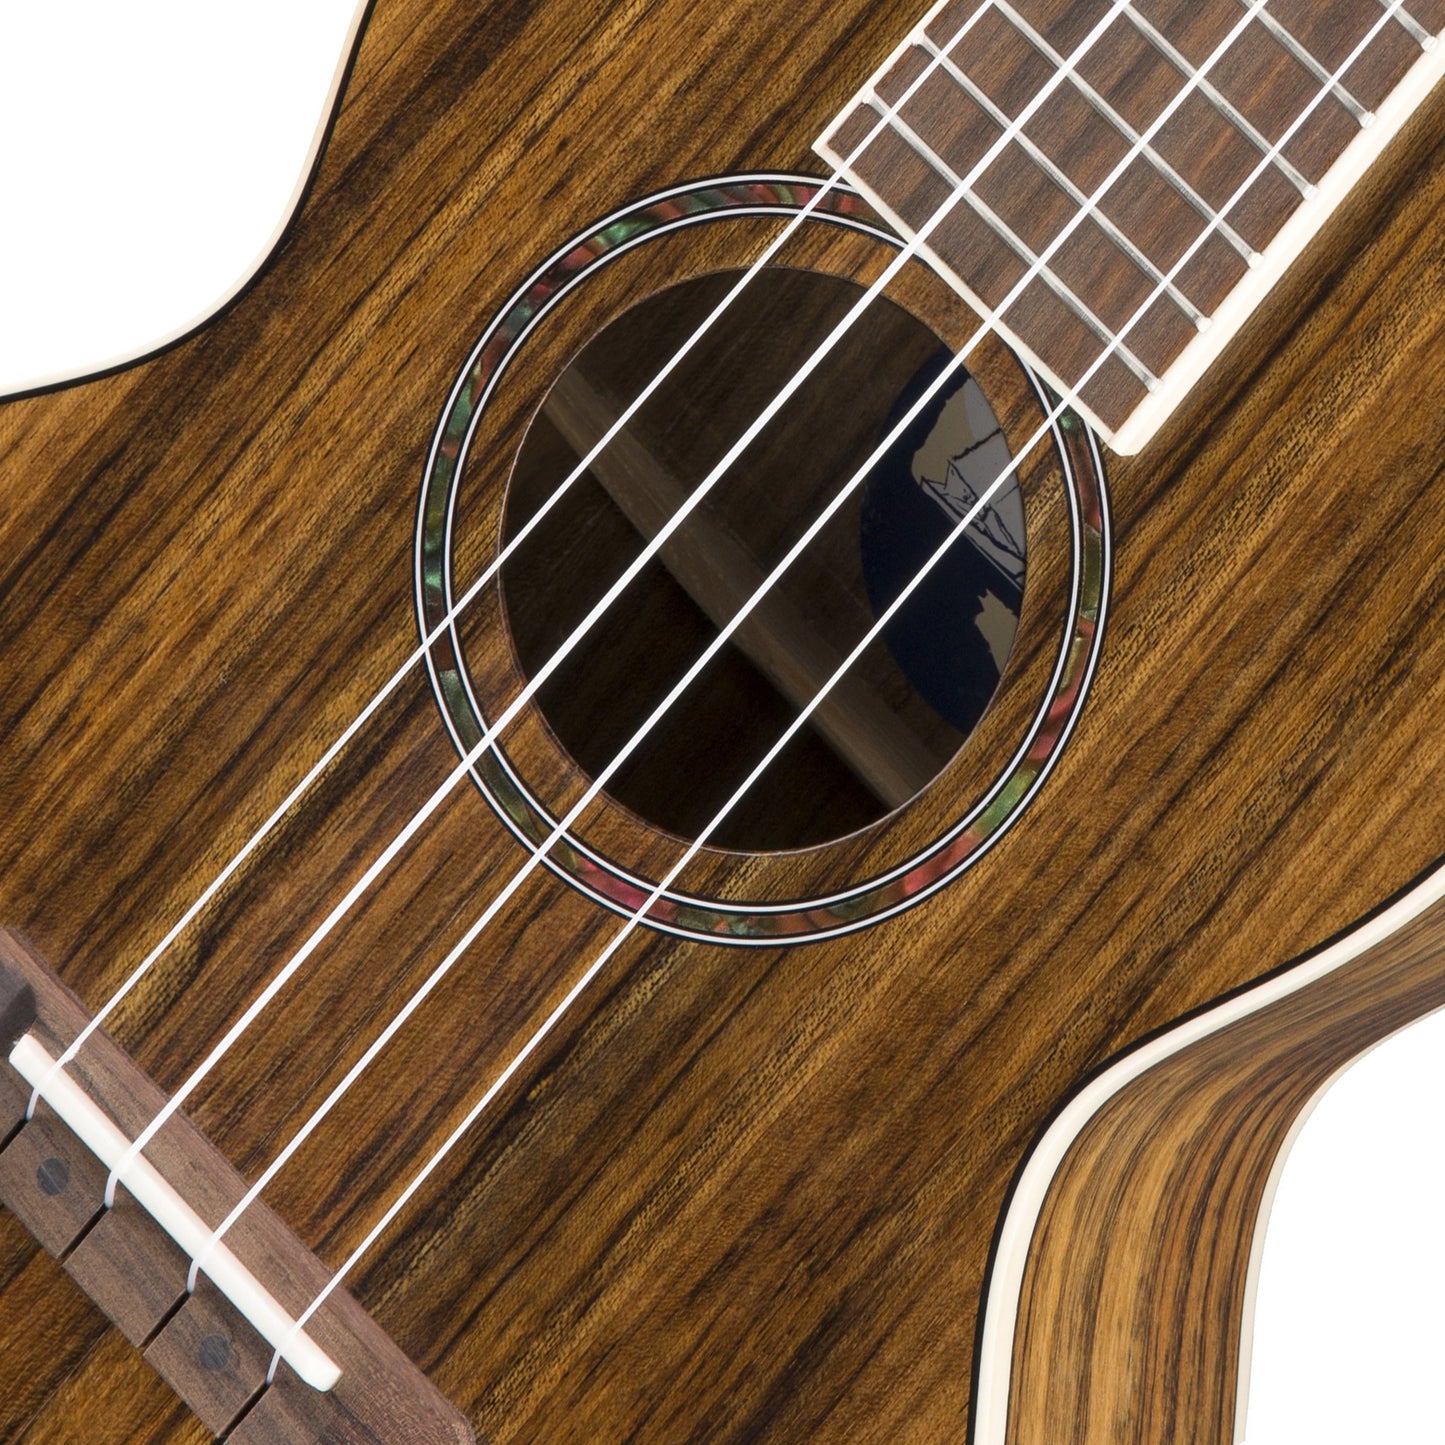 Fender Rincon Tenor Ukulele V2 Acoustic Electric 4 String Guitar with Built-in Tuner, Gig Bag, Natural Satin Finish